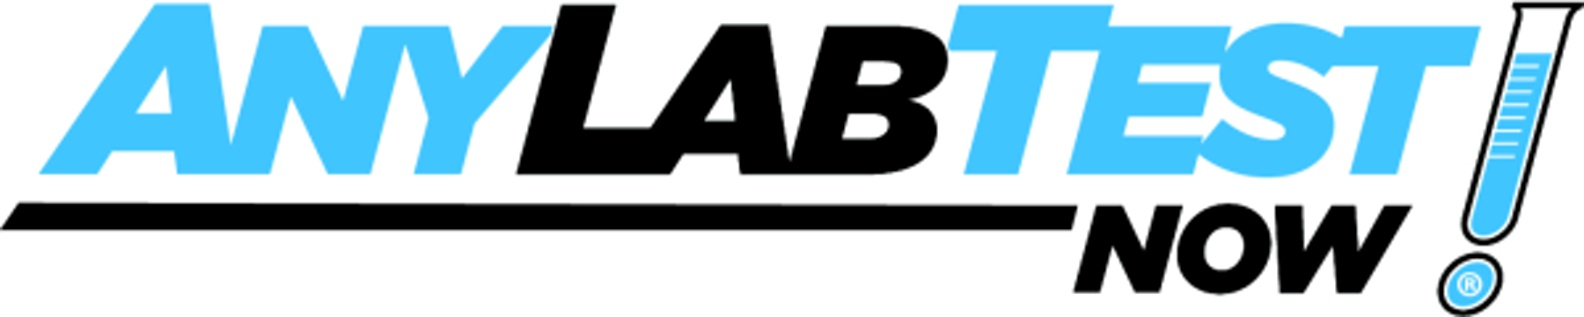 Any Lab Test Now - Greenwood Logo